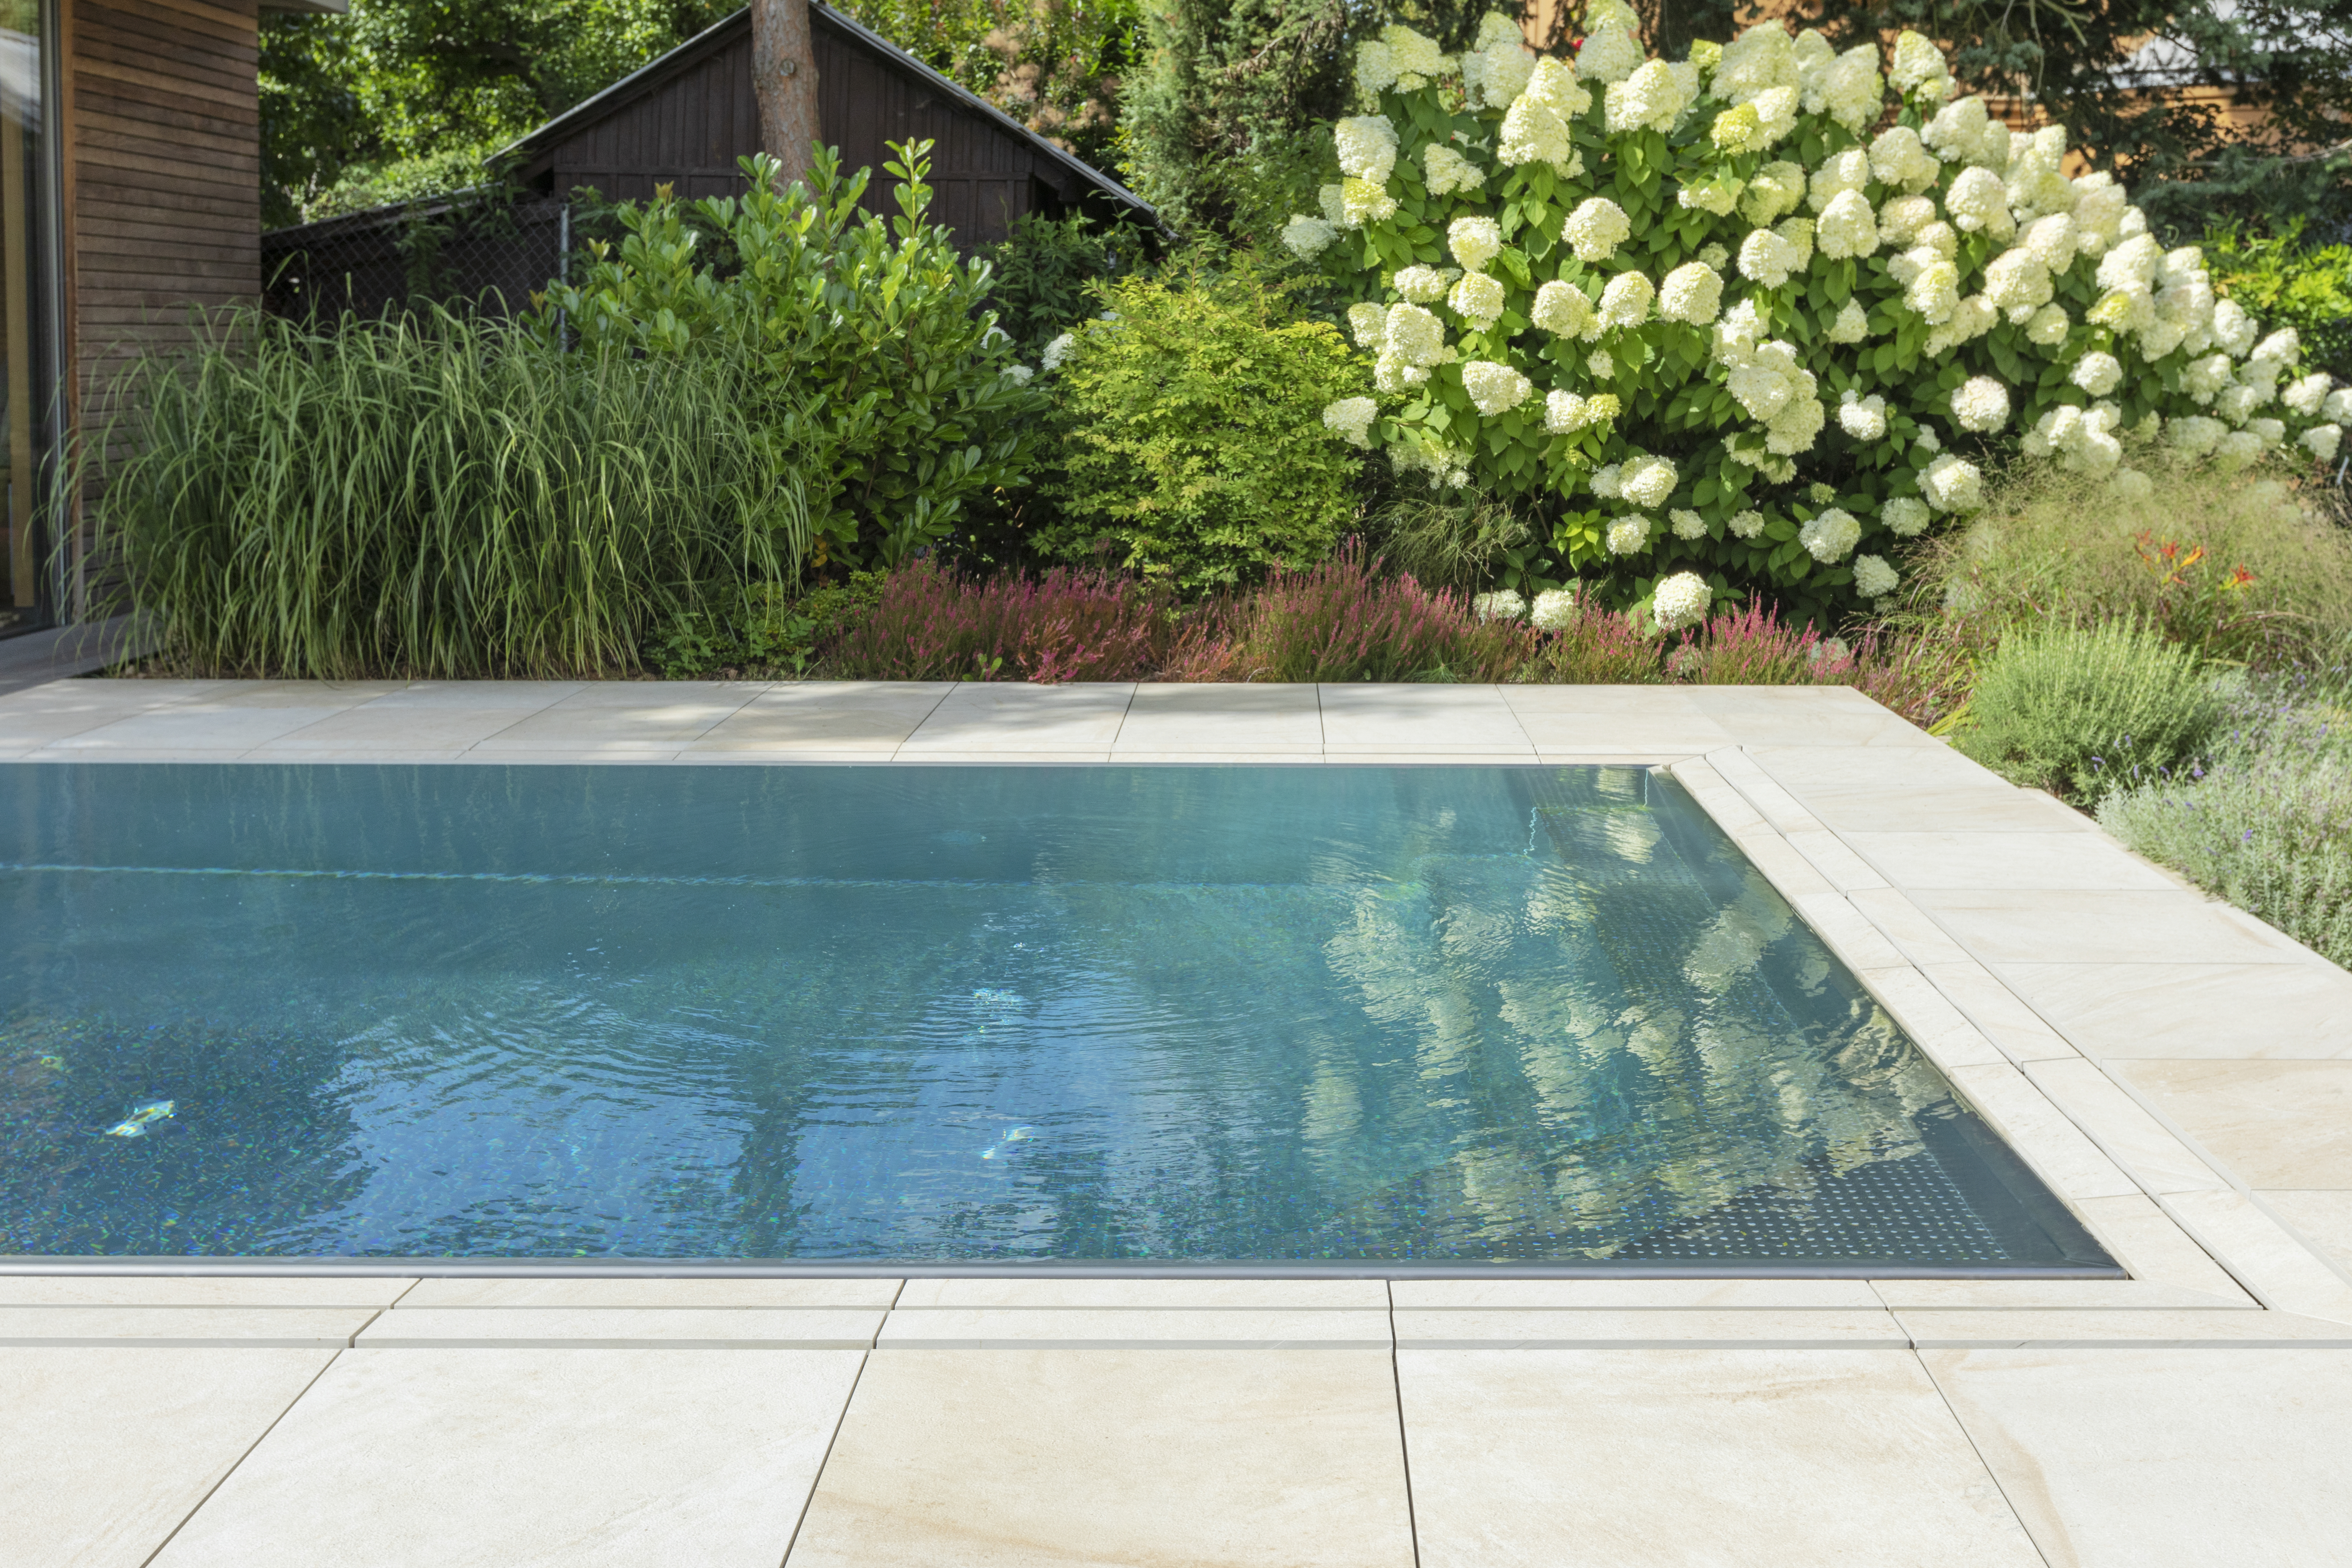 Luxury deck-level stainless-steel pool by IMAGINOX